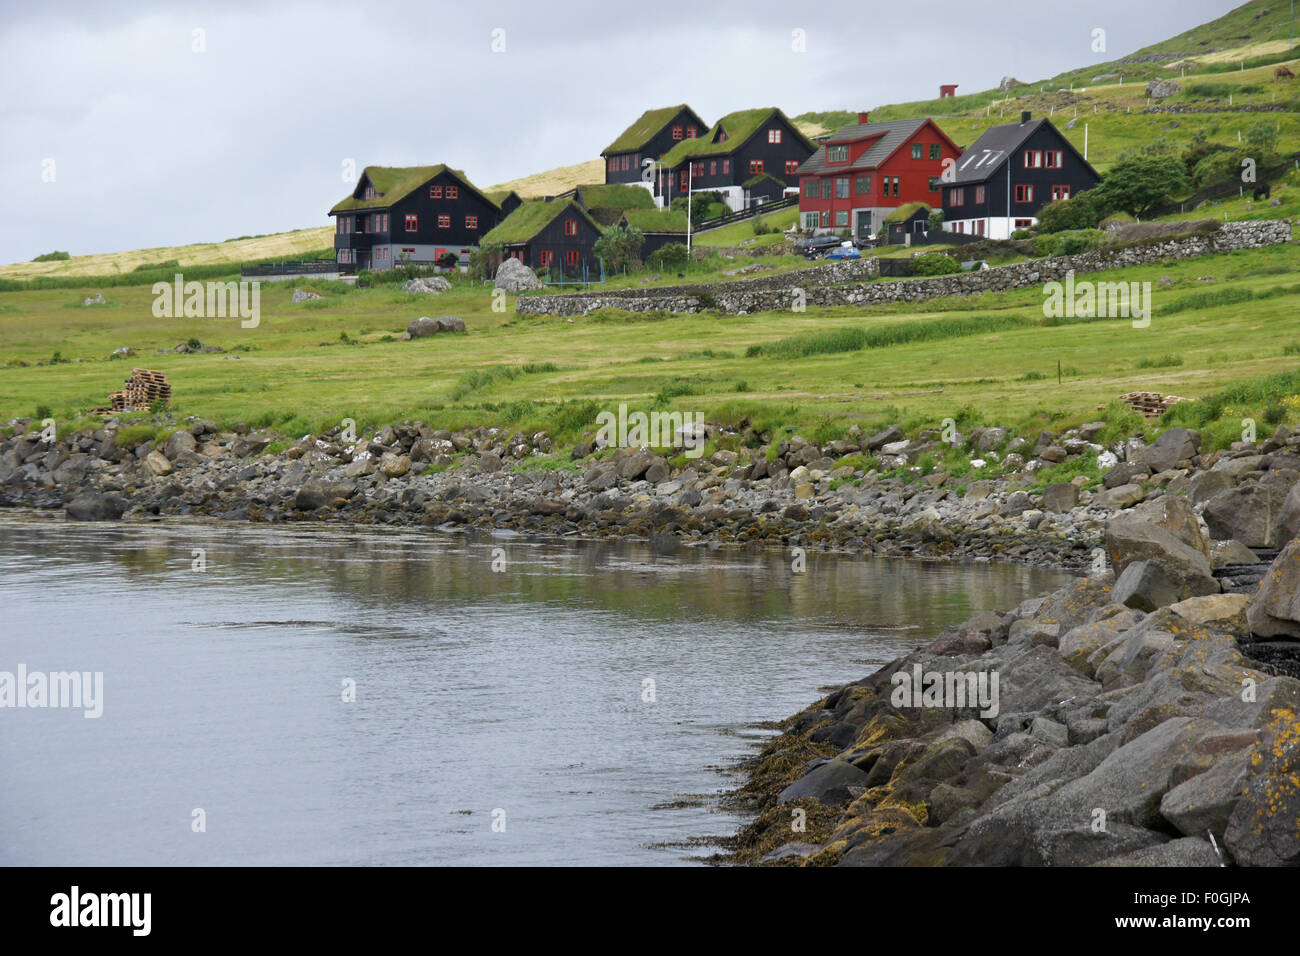 Turf-roofed homes in village of Kirkjubour, Stremoy, Faroe Islands Stock Photo